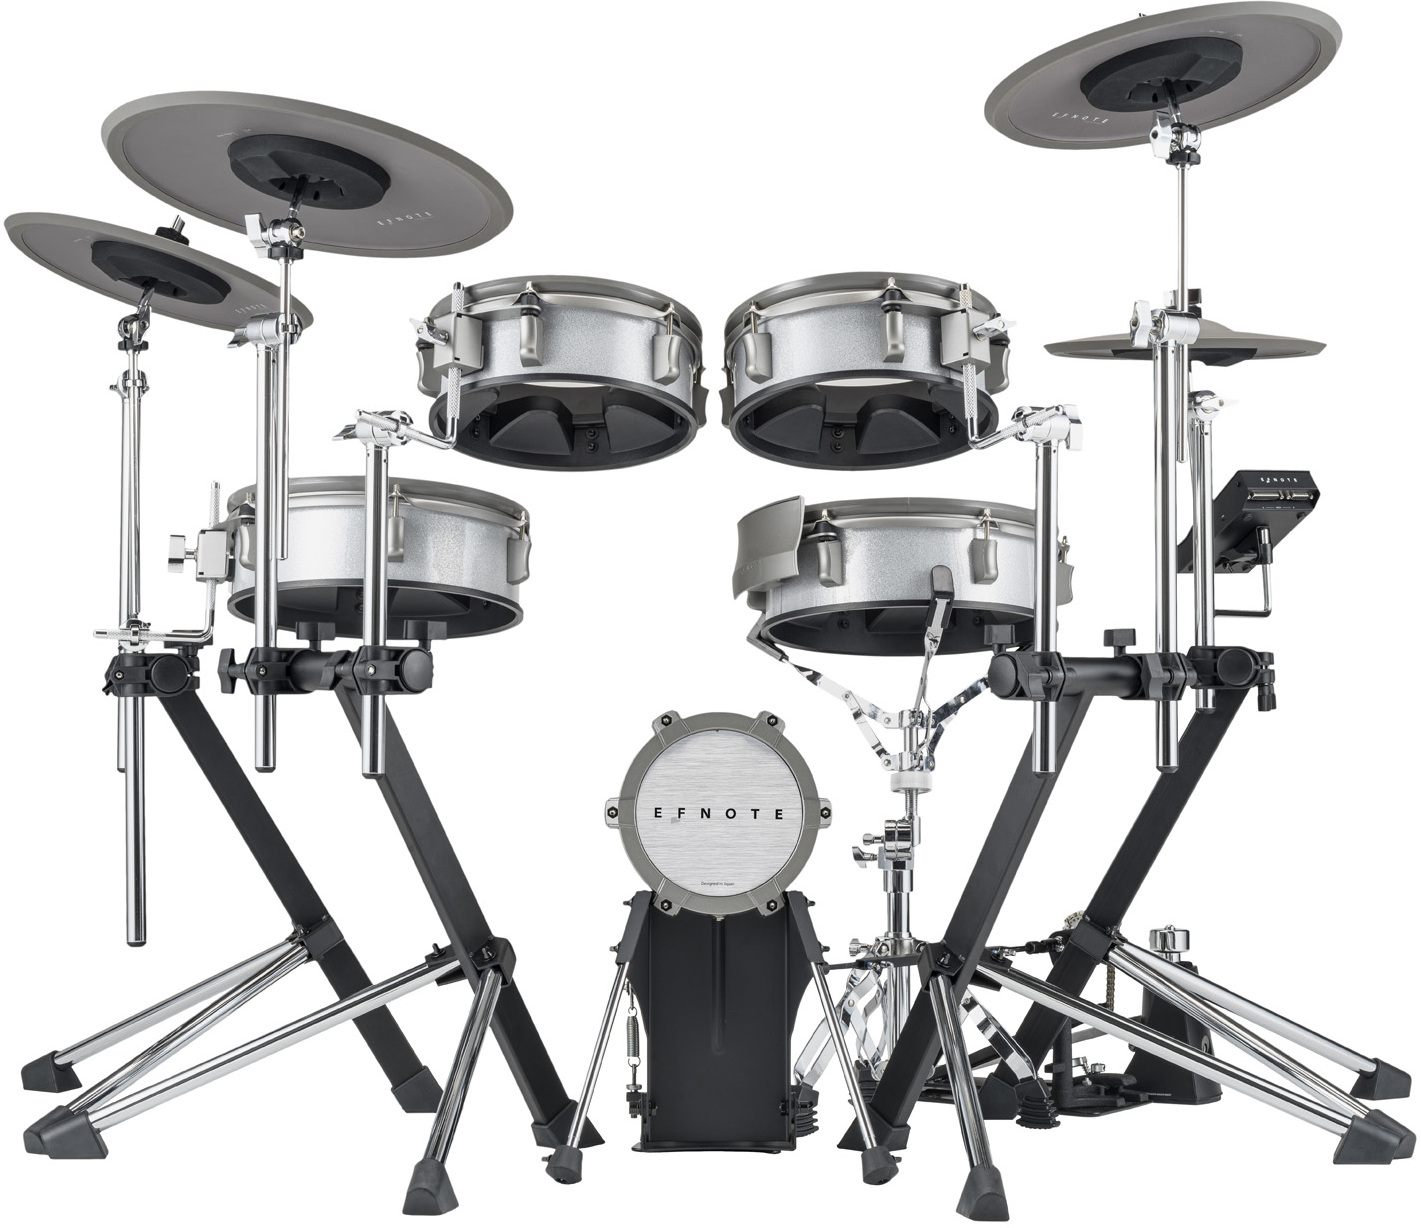 Efnote Efd3 Drum Kit - Electronic drum kit & set - Main picture